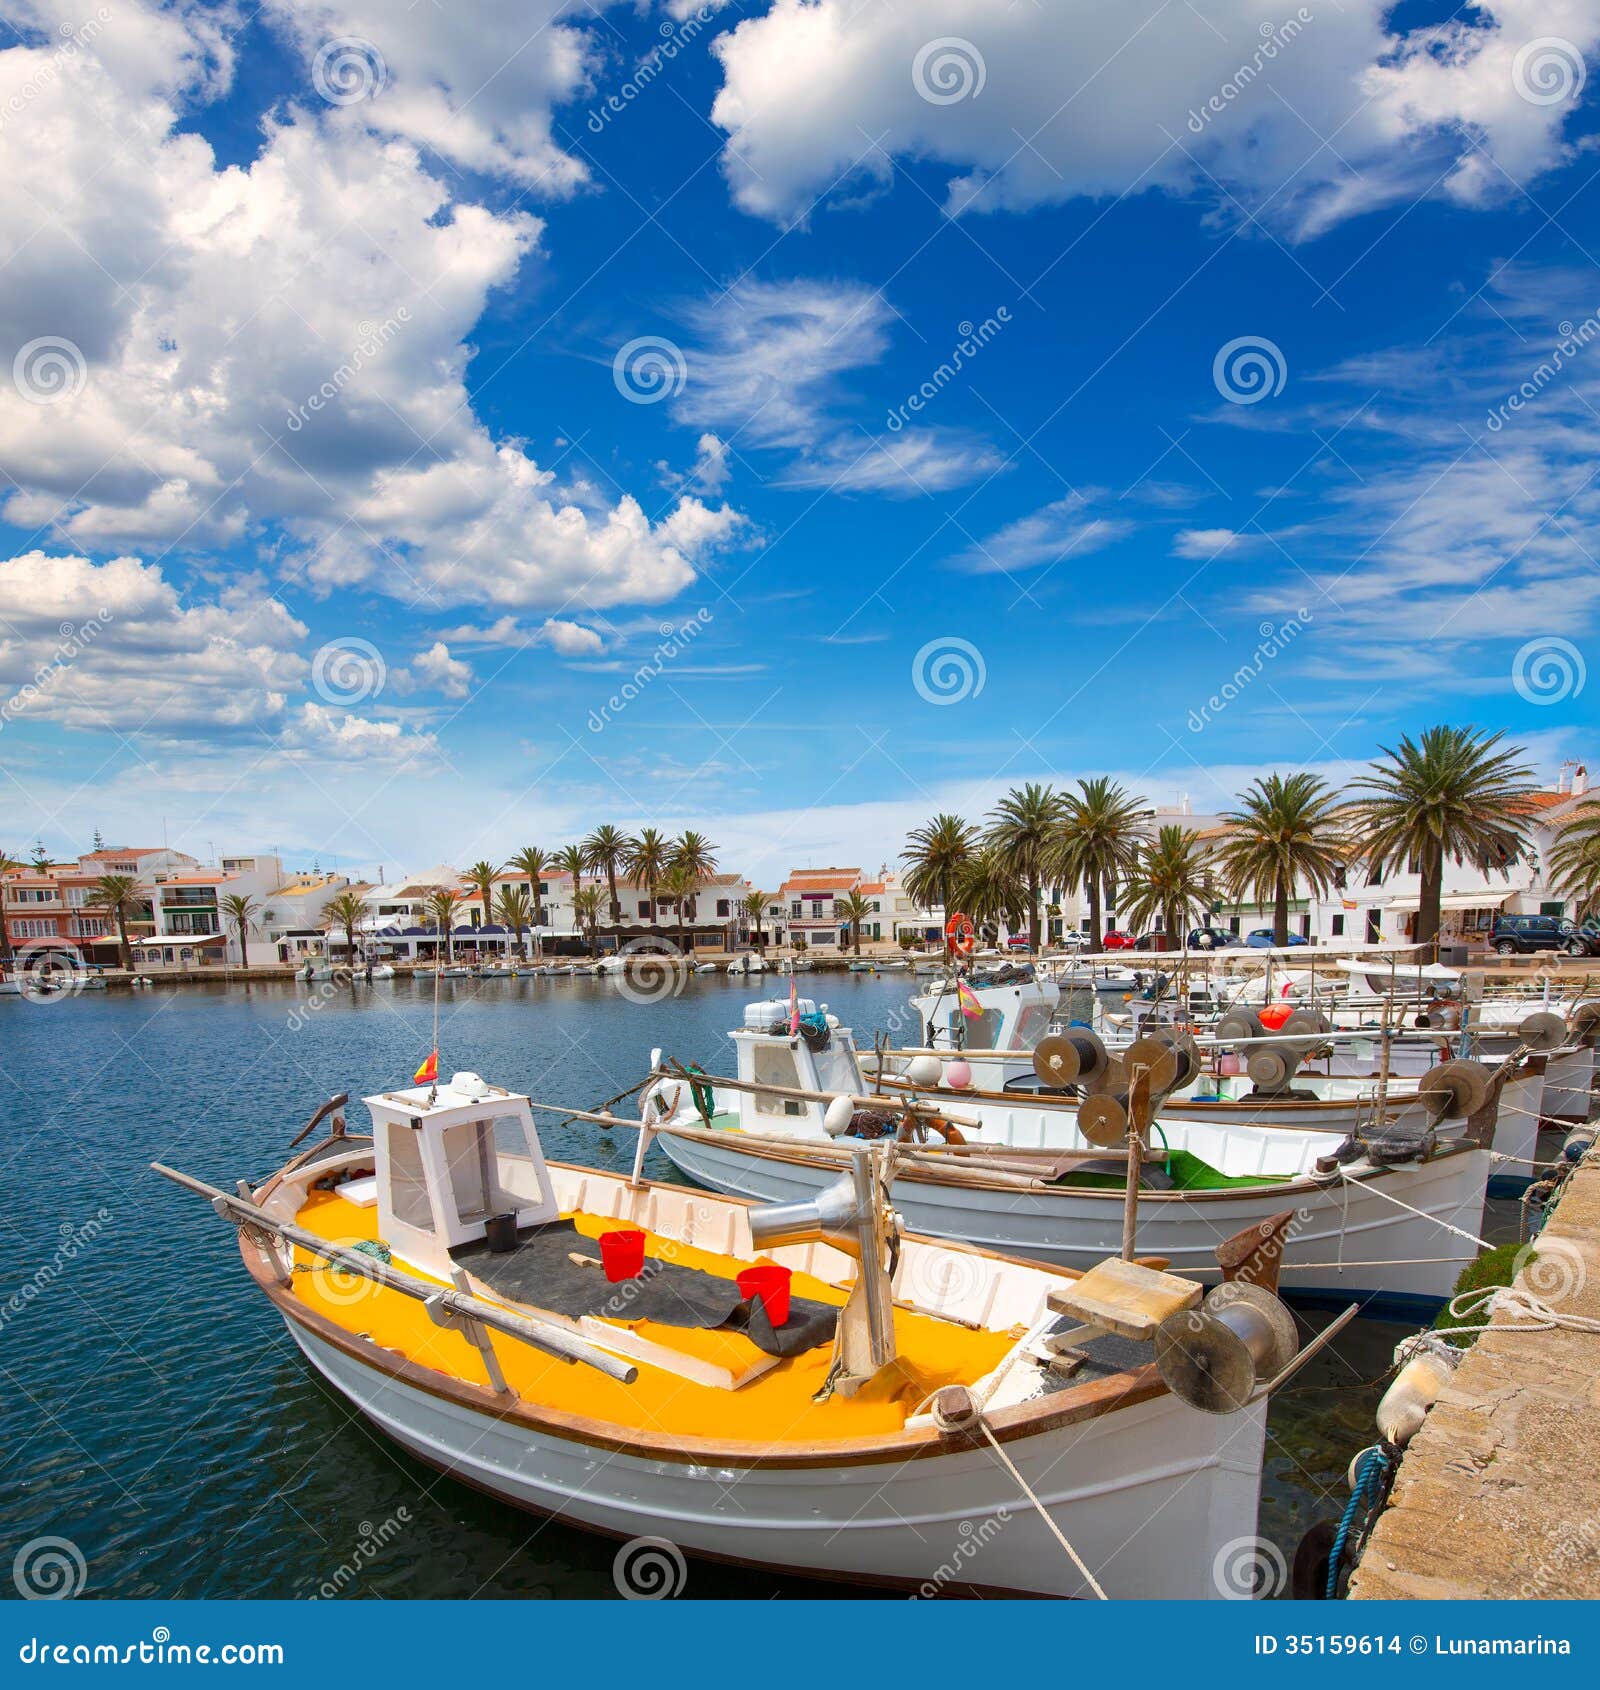 fornells port in menorca marina boats balearic islands